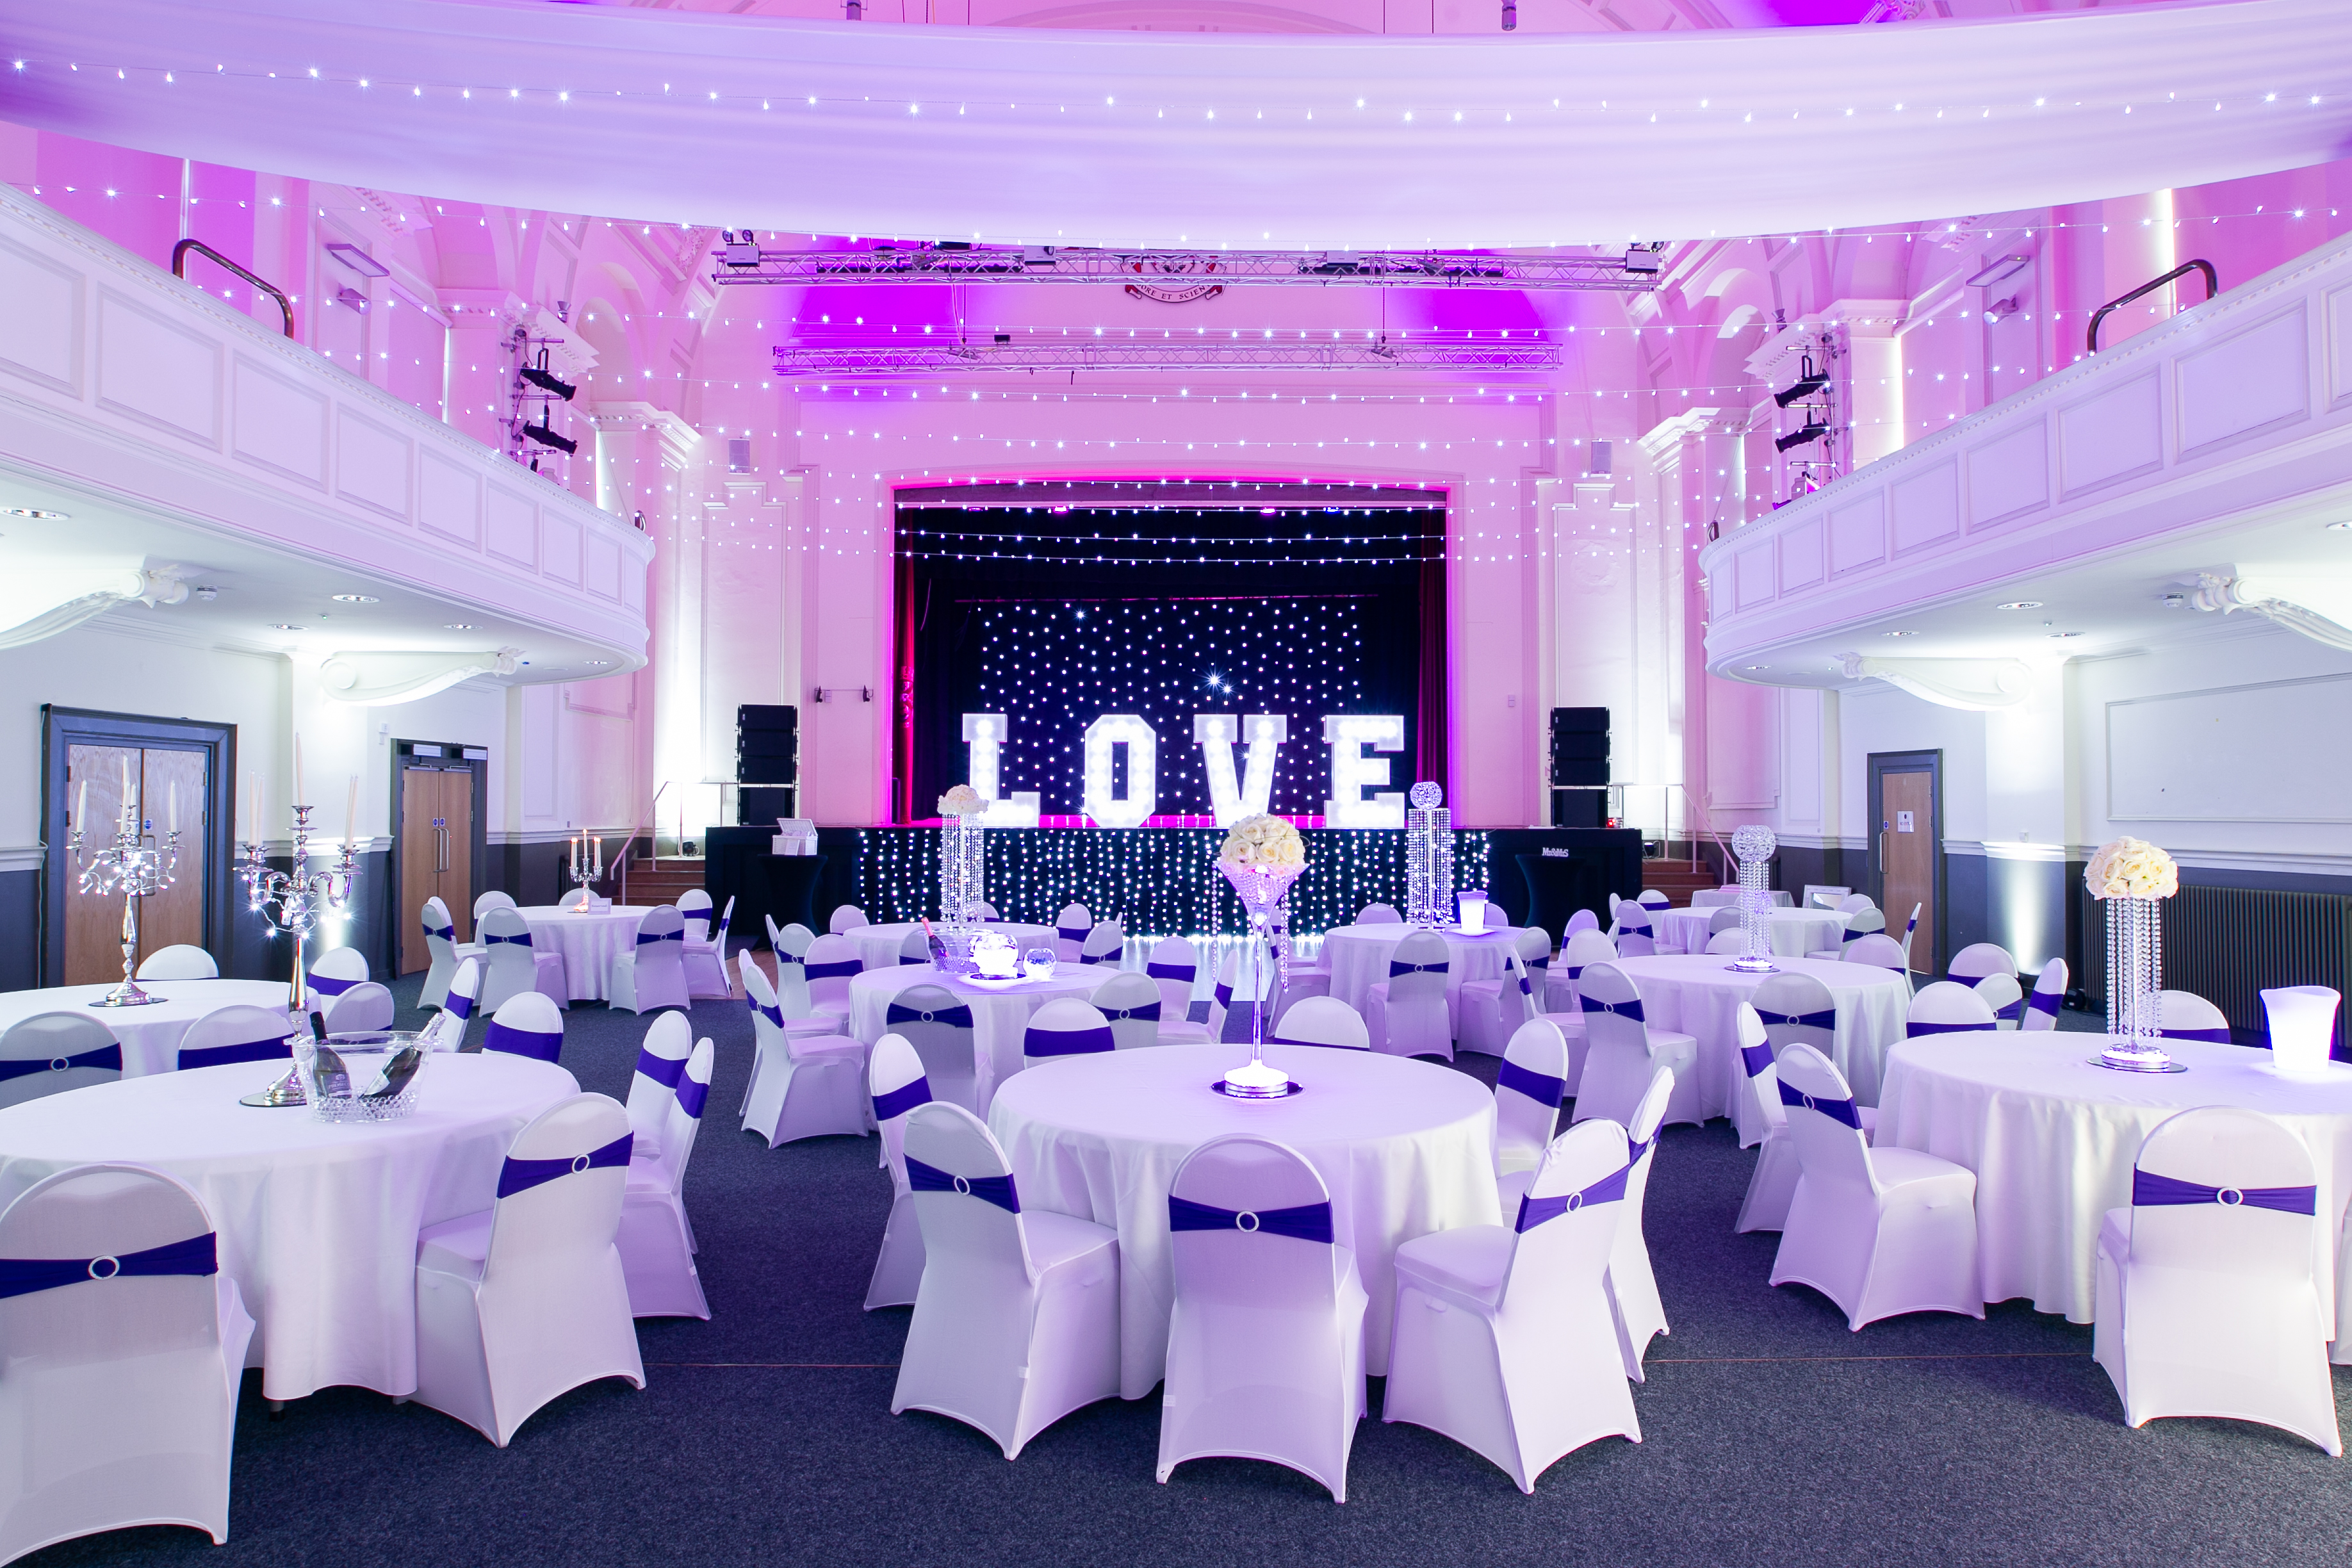 image of Grand Hall - purple lights